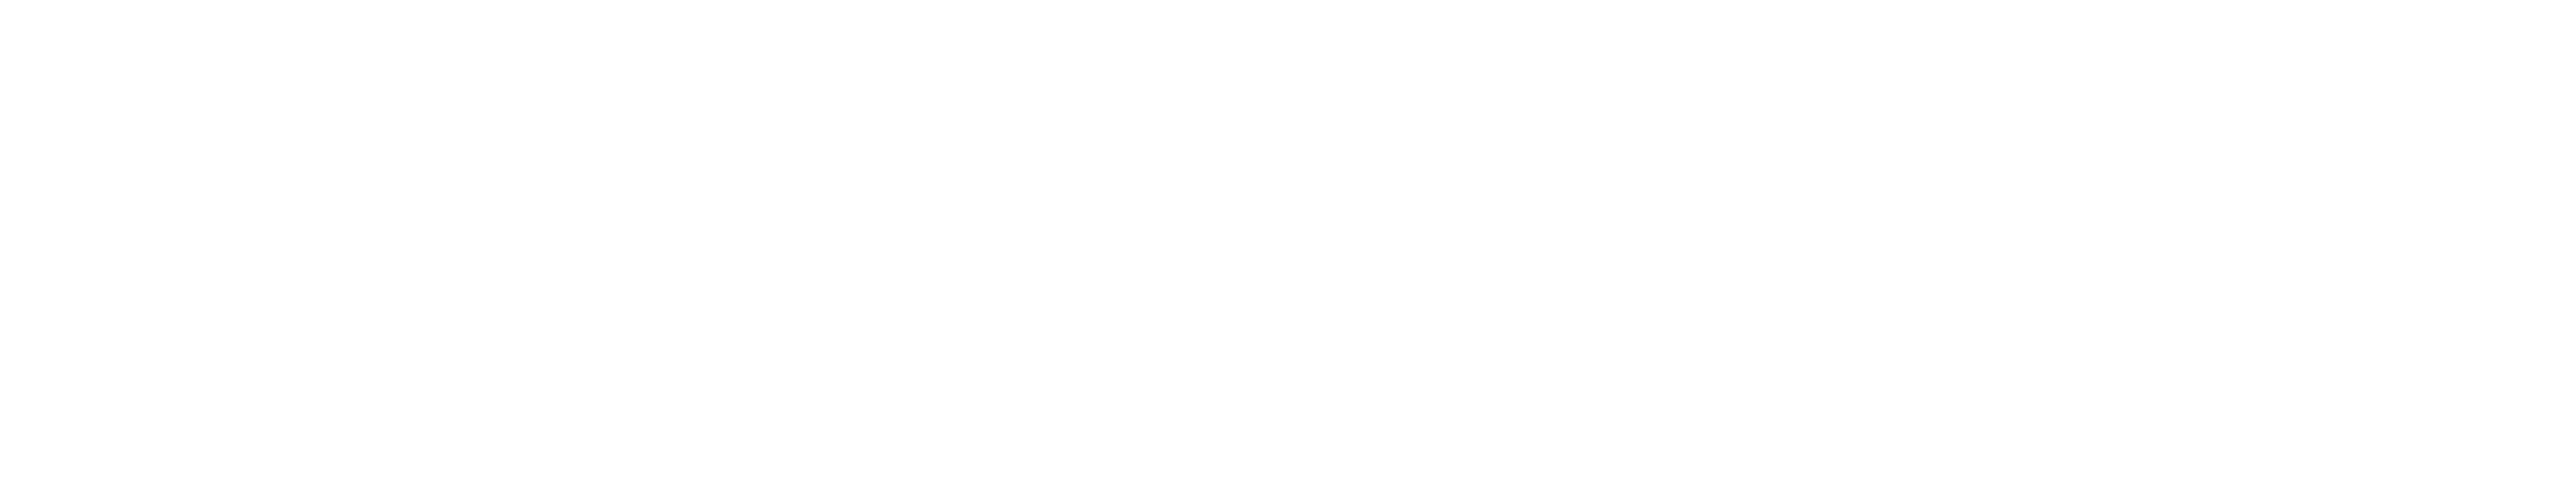 Robust Goods logo